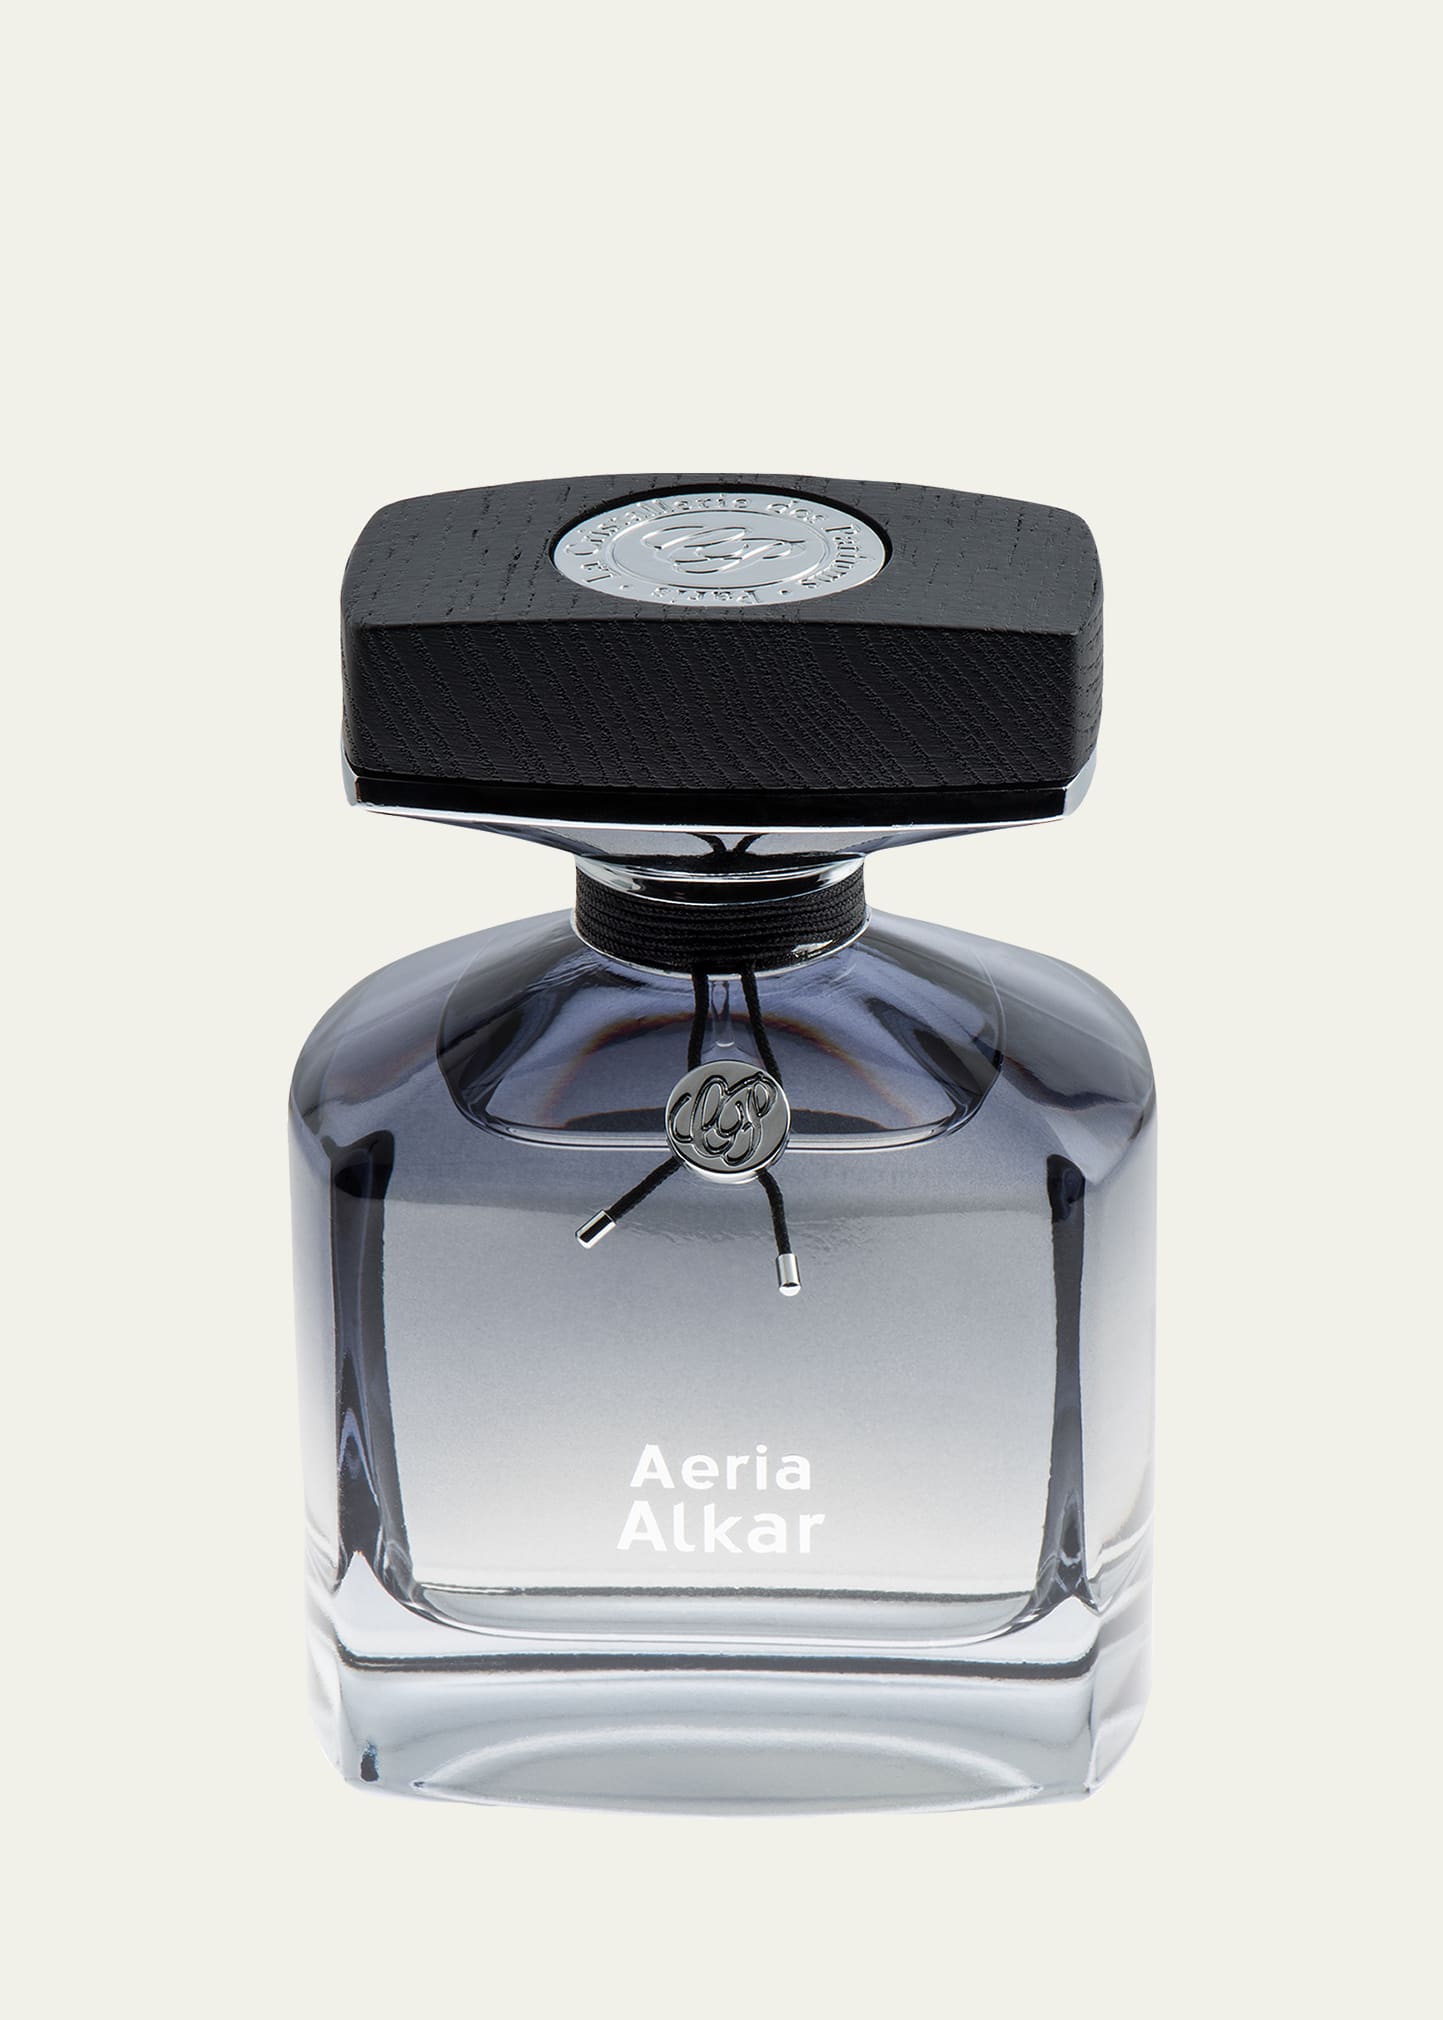 Aeria Alkar Eau de Parfum, 3.4 oz.